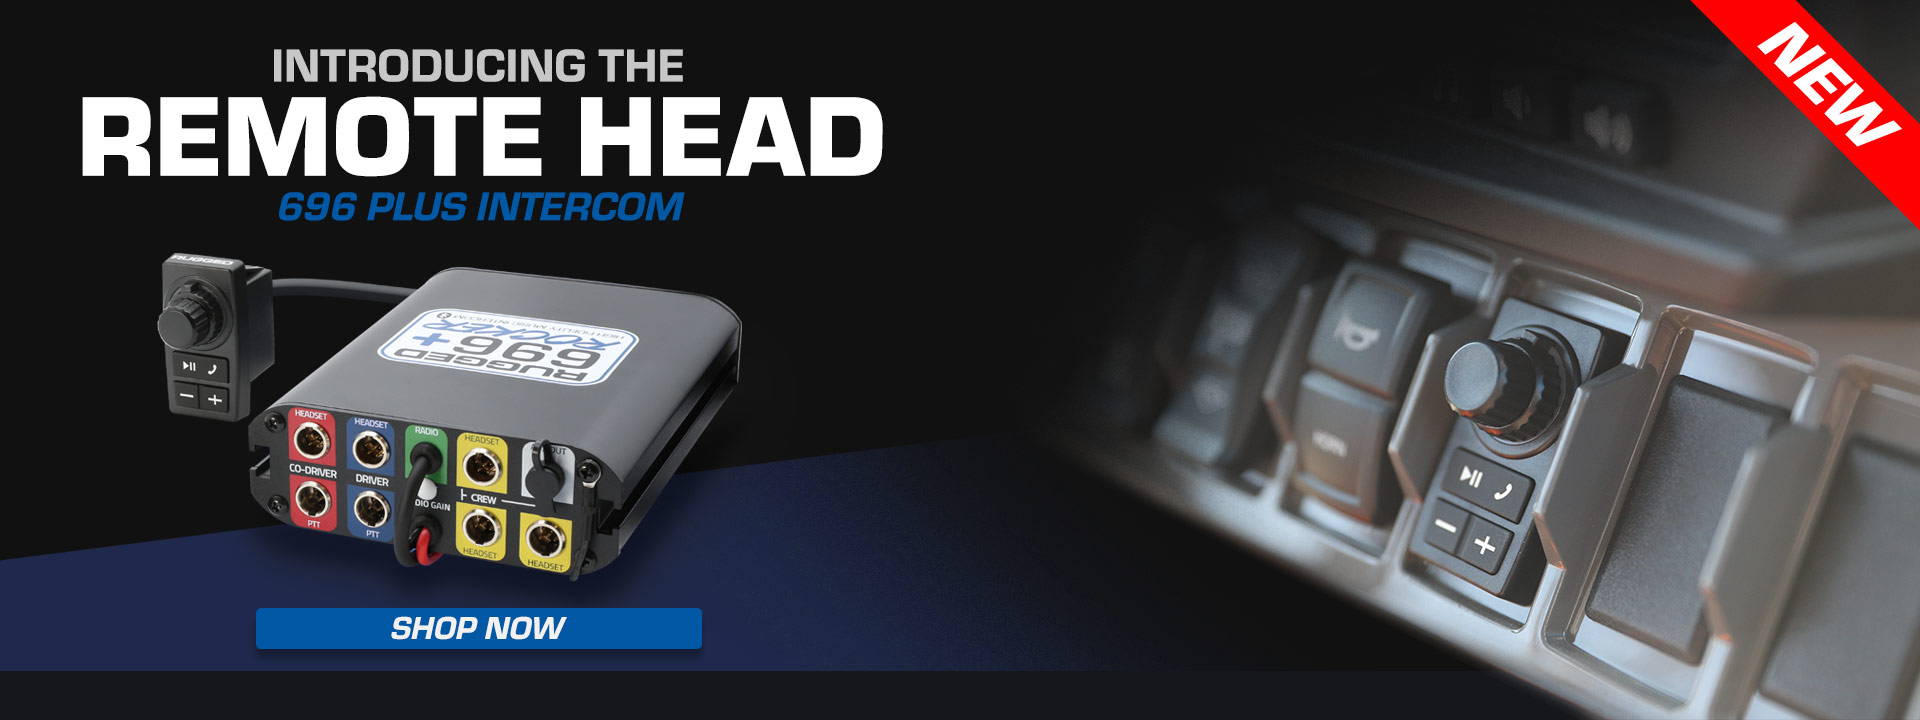 Introducing the Remote Head 696-Plus Intercom